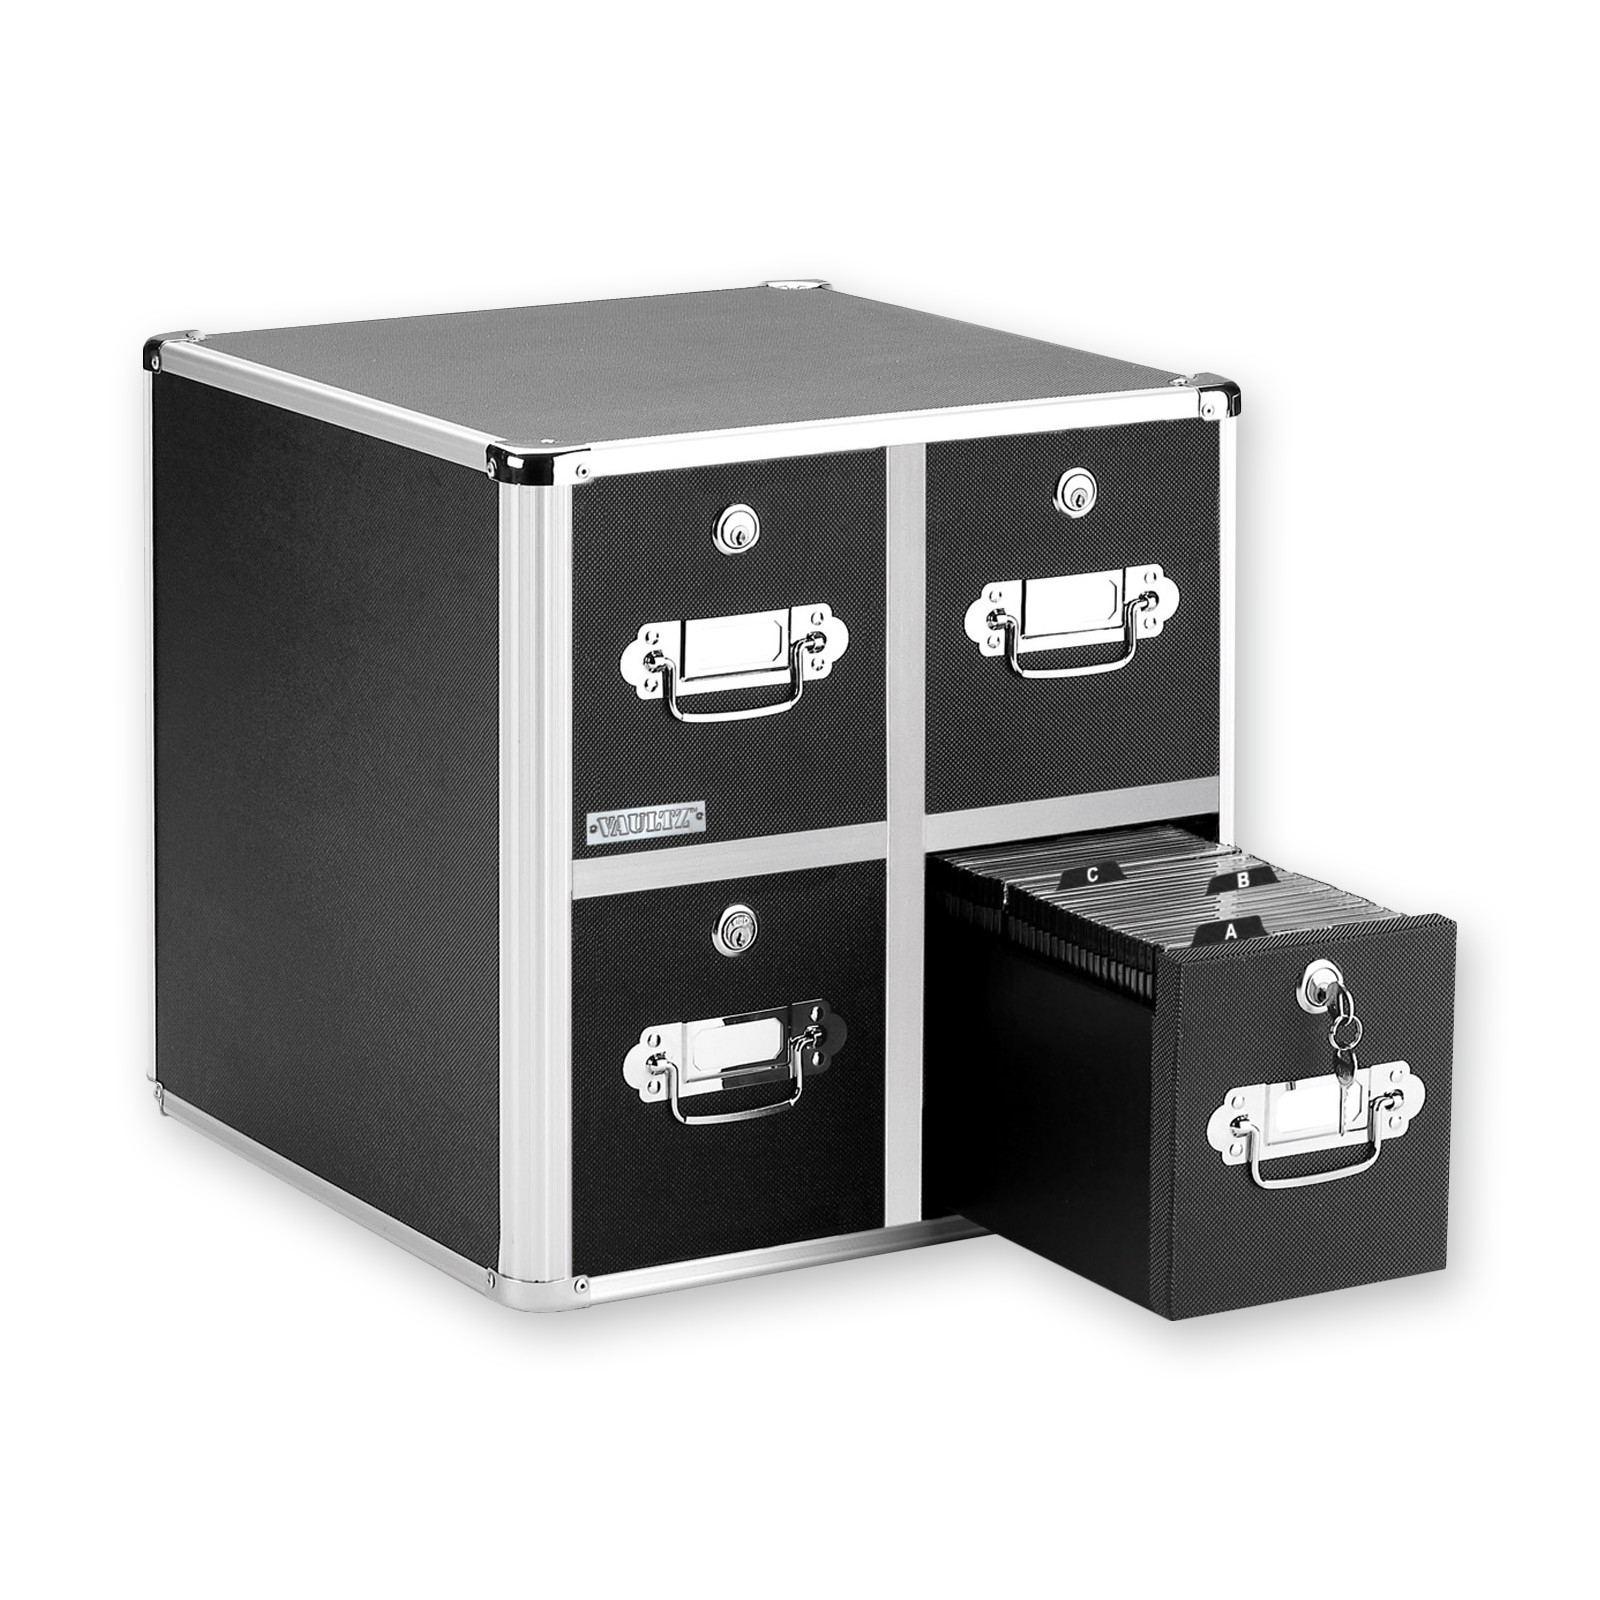 Vaultz Cd File Cabinet 4 Drawer Black Holds 660 Cds Vaultz throughout proportions 1600 X 1600